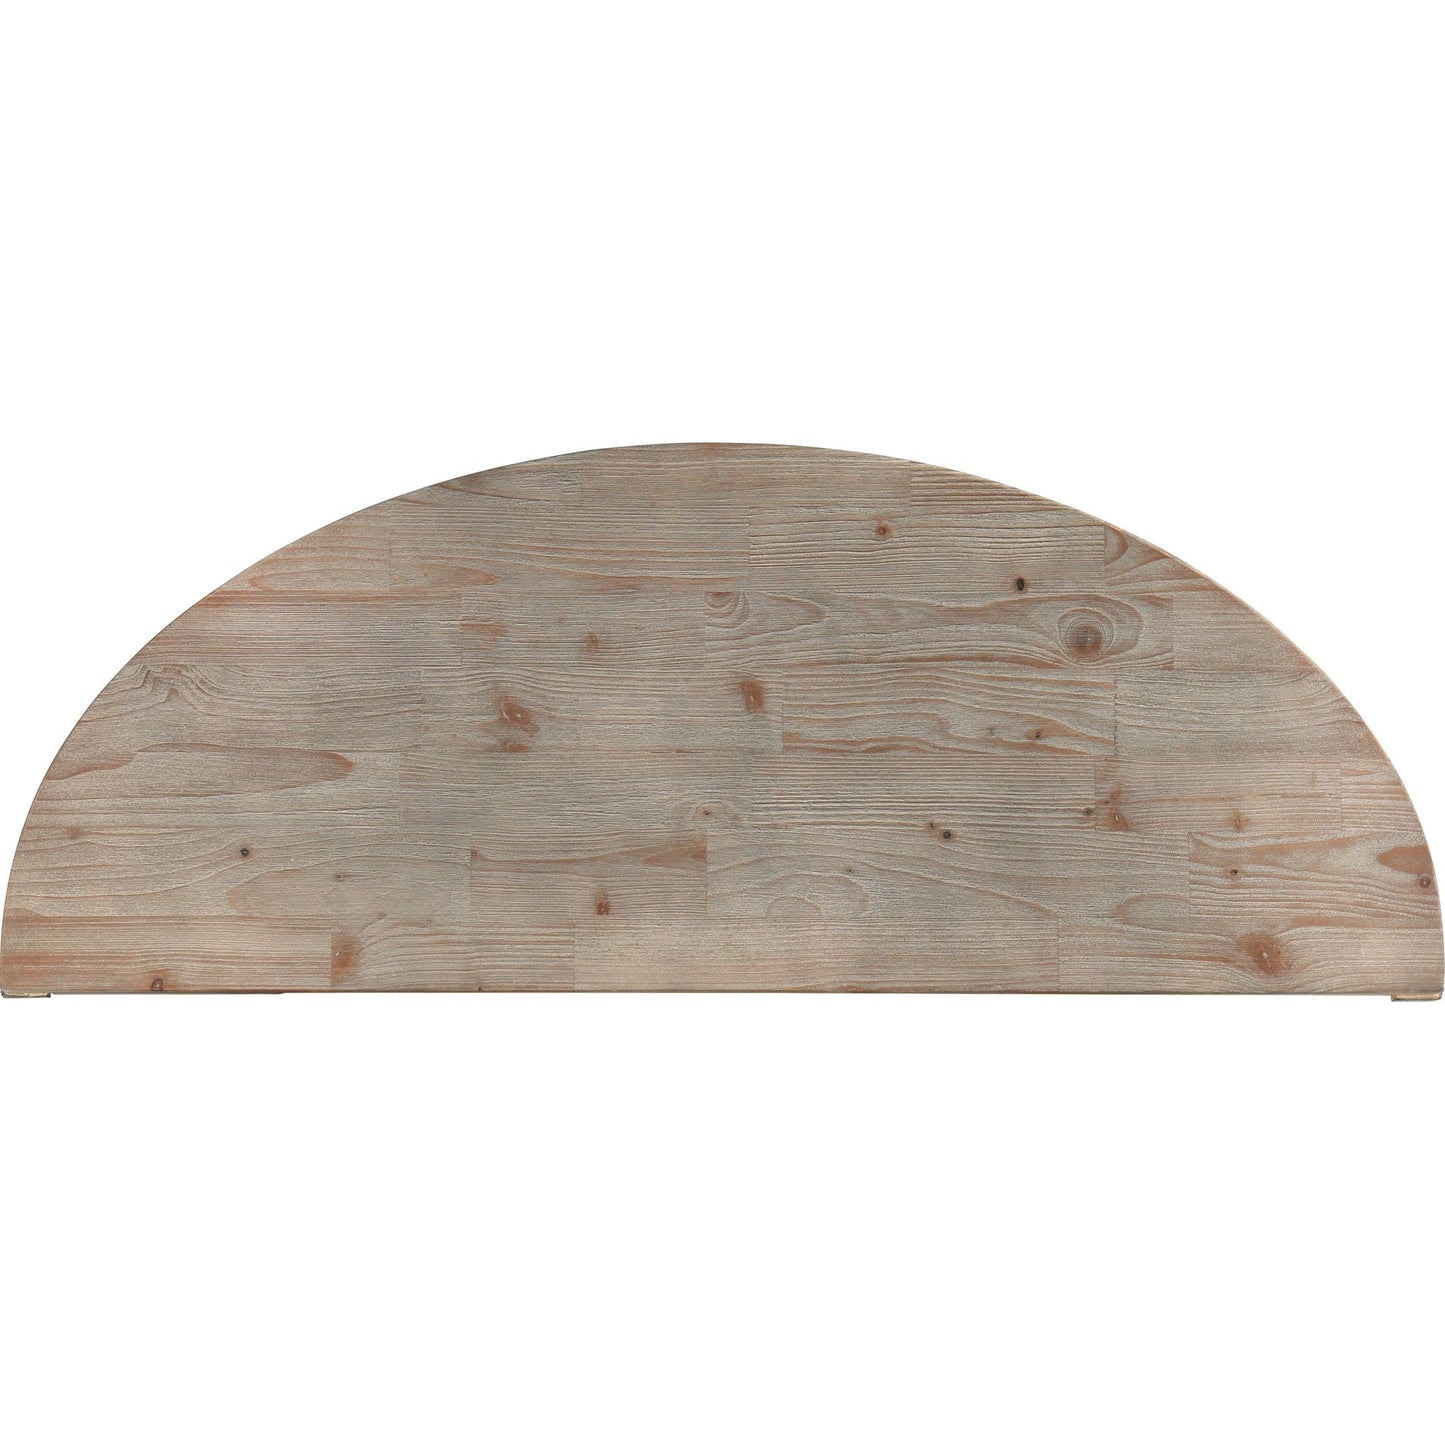 Glasslore Sofa Table - Wood